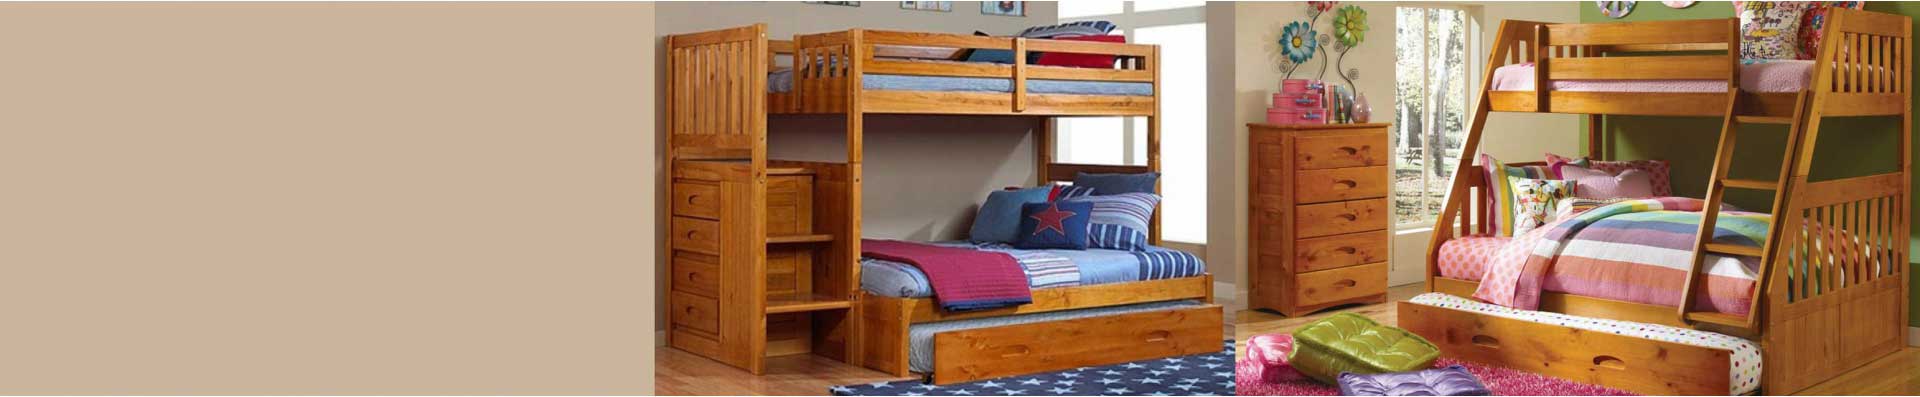 Bunk Beds Loft Captains, Bunk Beds For 100 Dollars Or Less